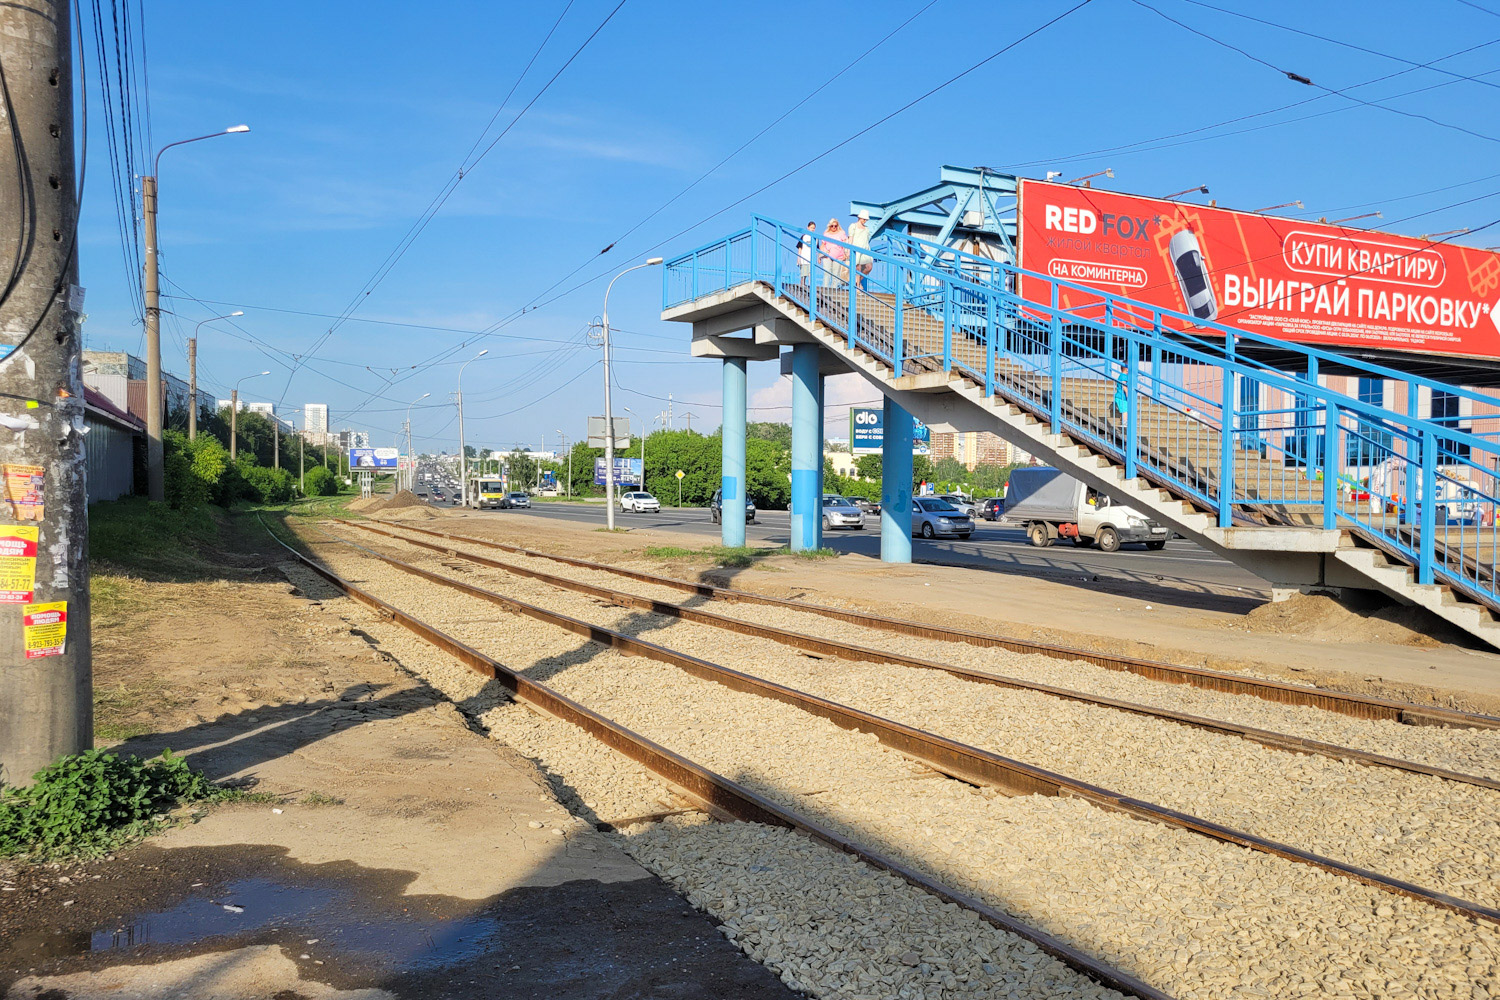 Novoszibirszk — Tram and trolleybus roads